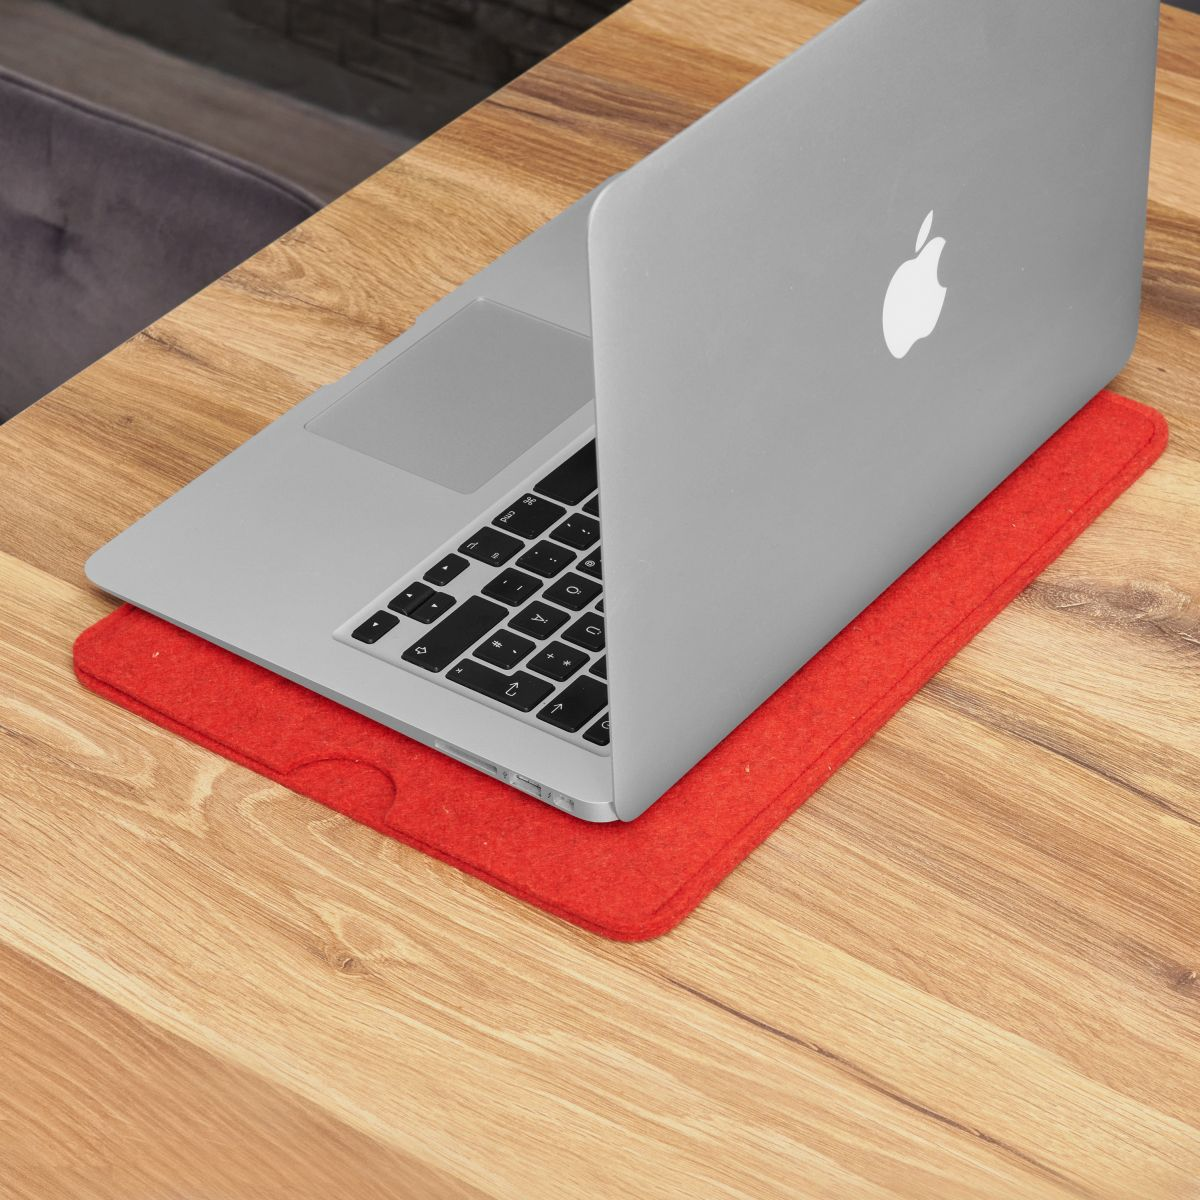 für COVERKINGZ Laptop (100% Apple Filz Schurwolle), Rot Sleeve Bag Tasche Laptop